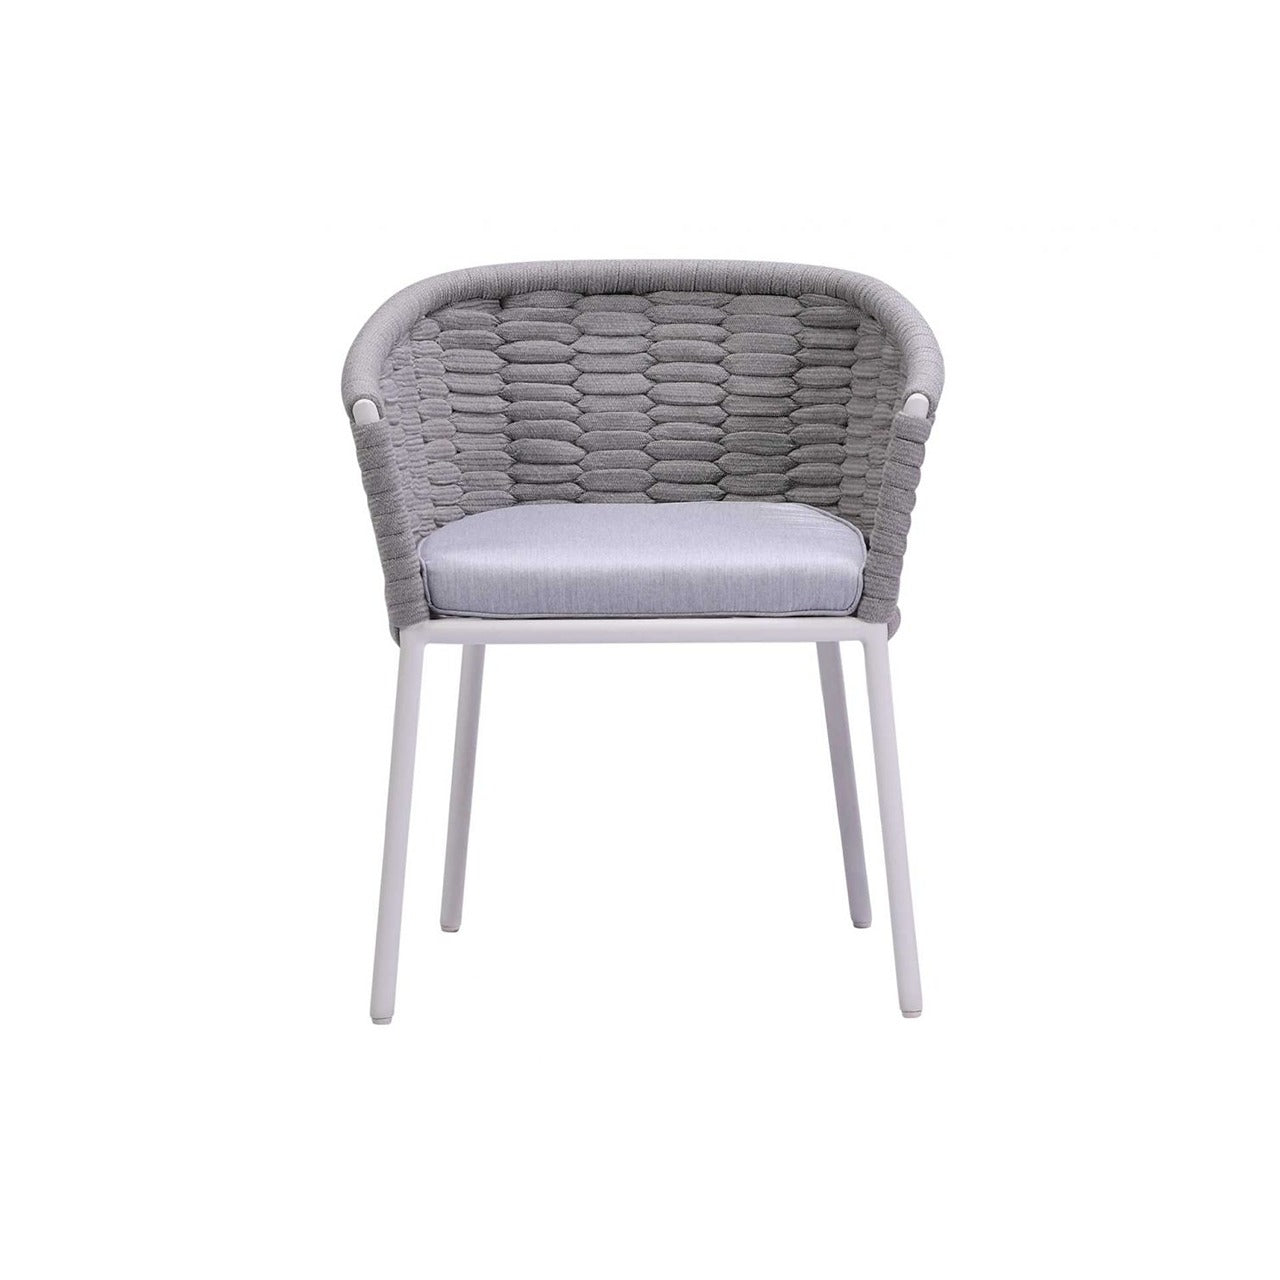 Perpetual Metal Madison Dining Chair | Set of 2